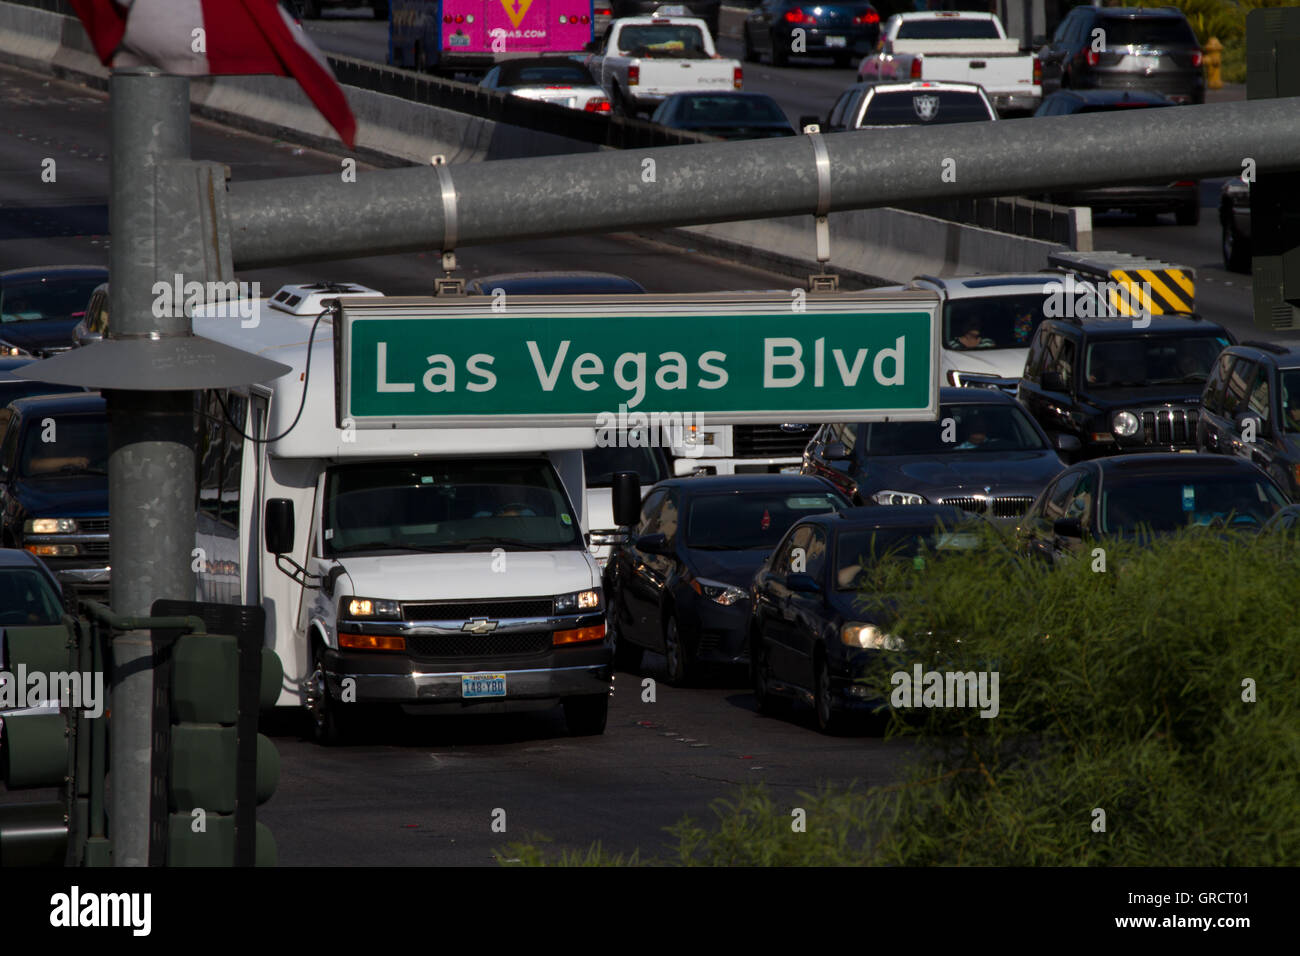 Las Vegas Blvd road sign with automobiles behind it. Las Vegas. Nevada USA Stock Photo